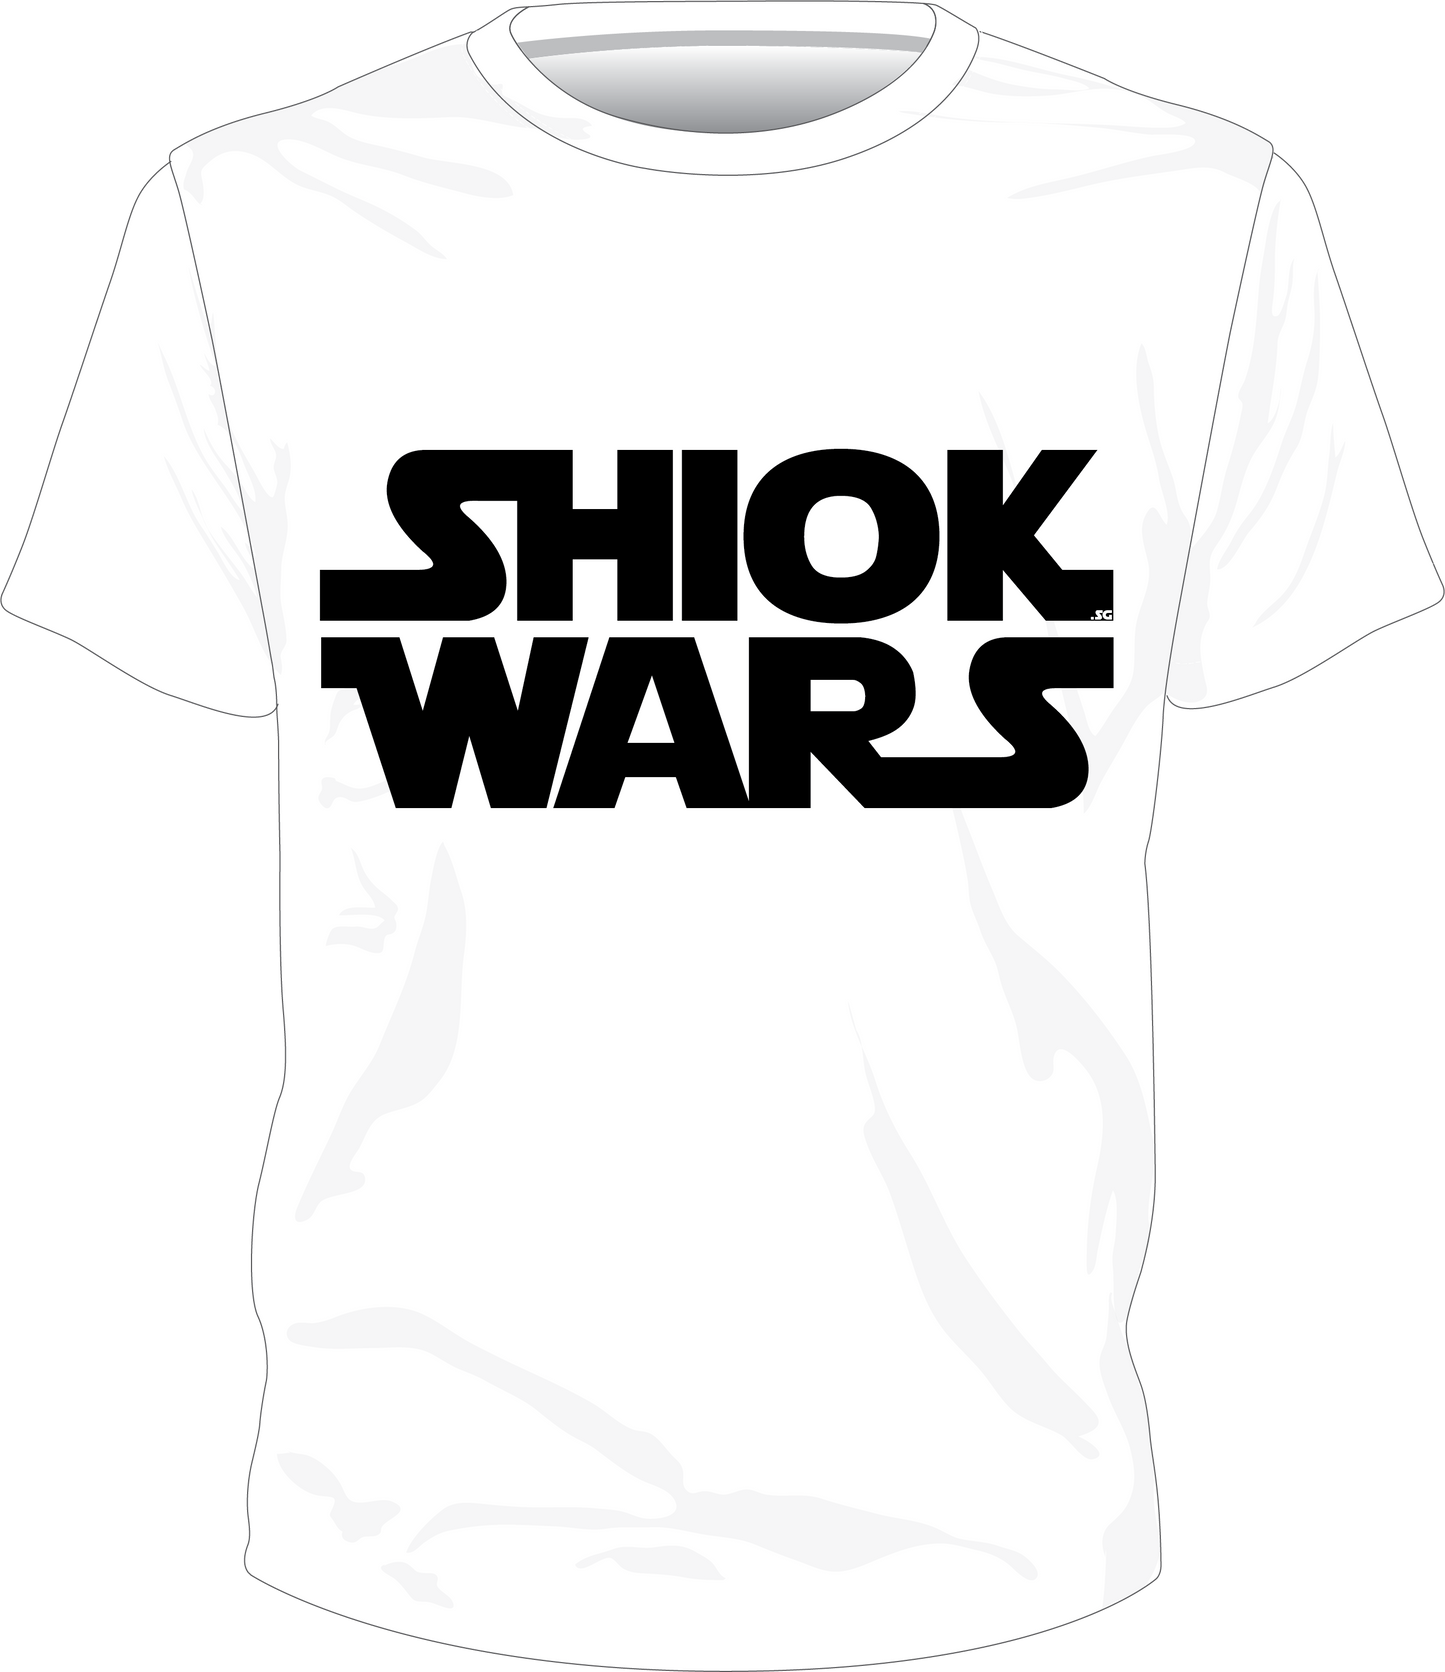 Shiok Wars